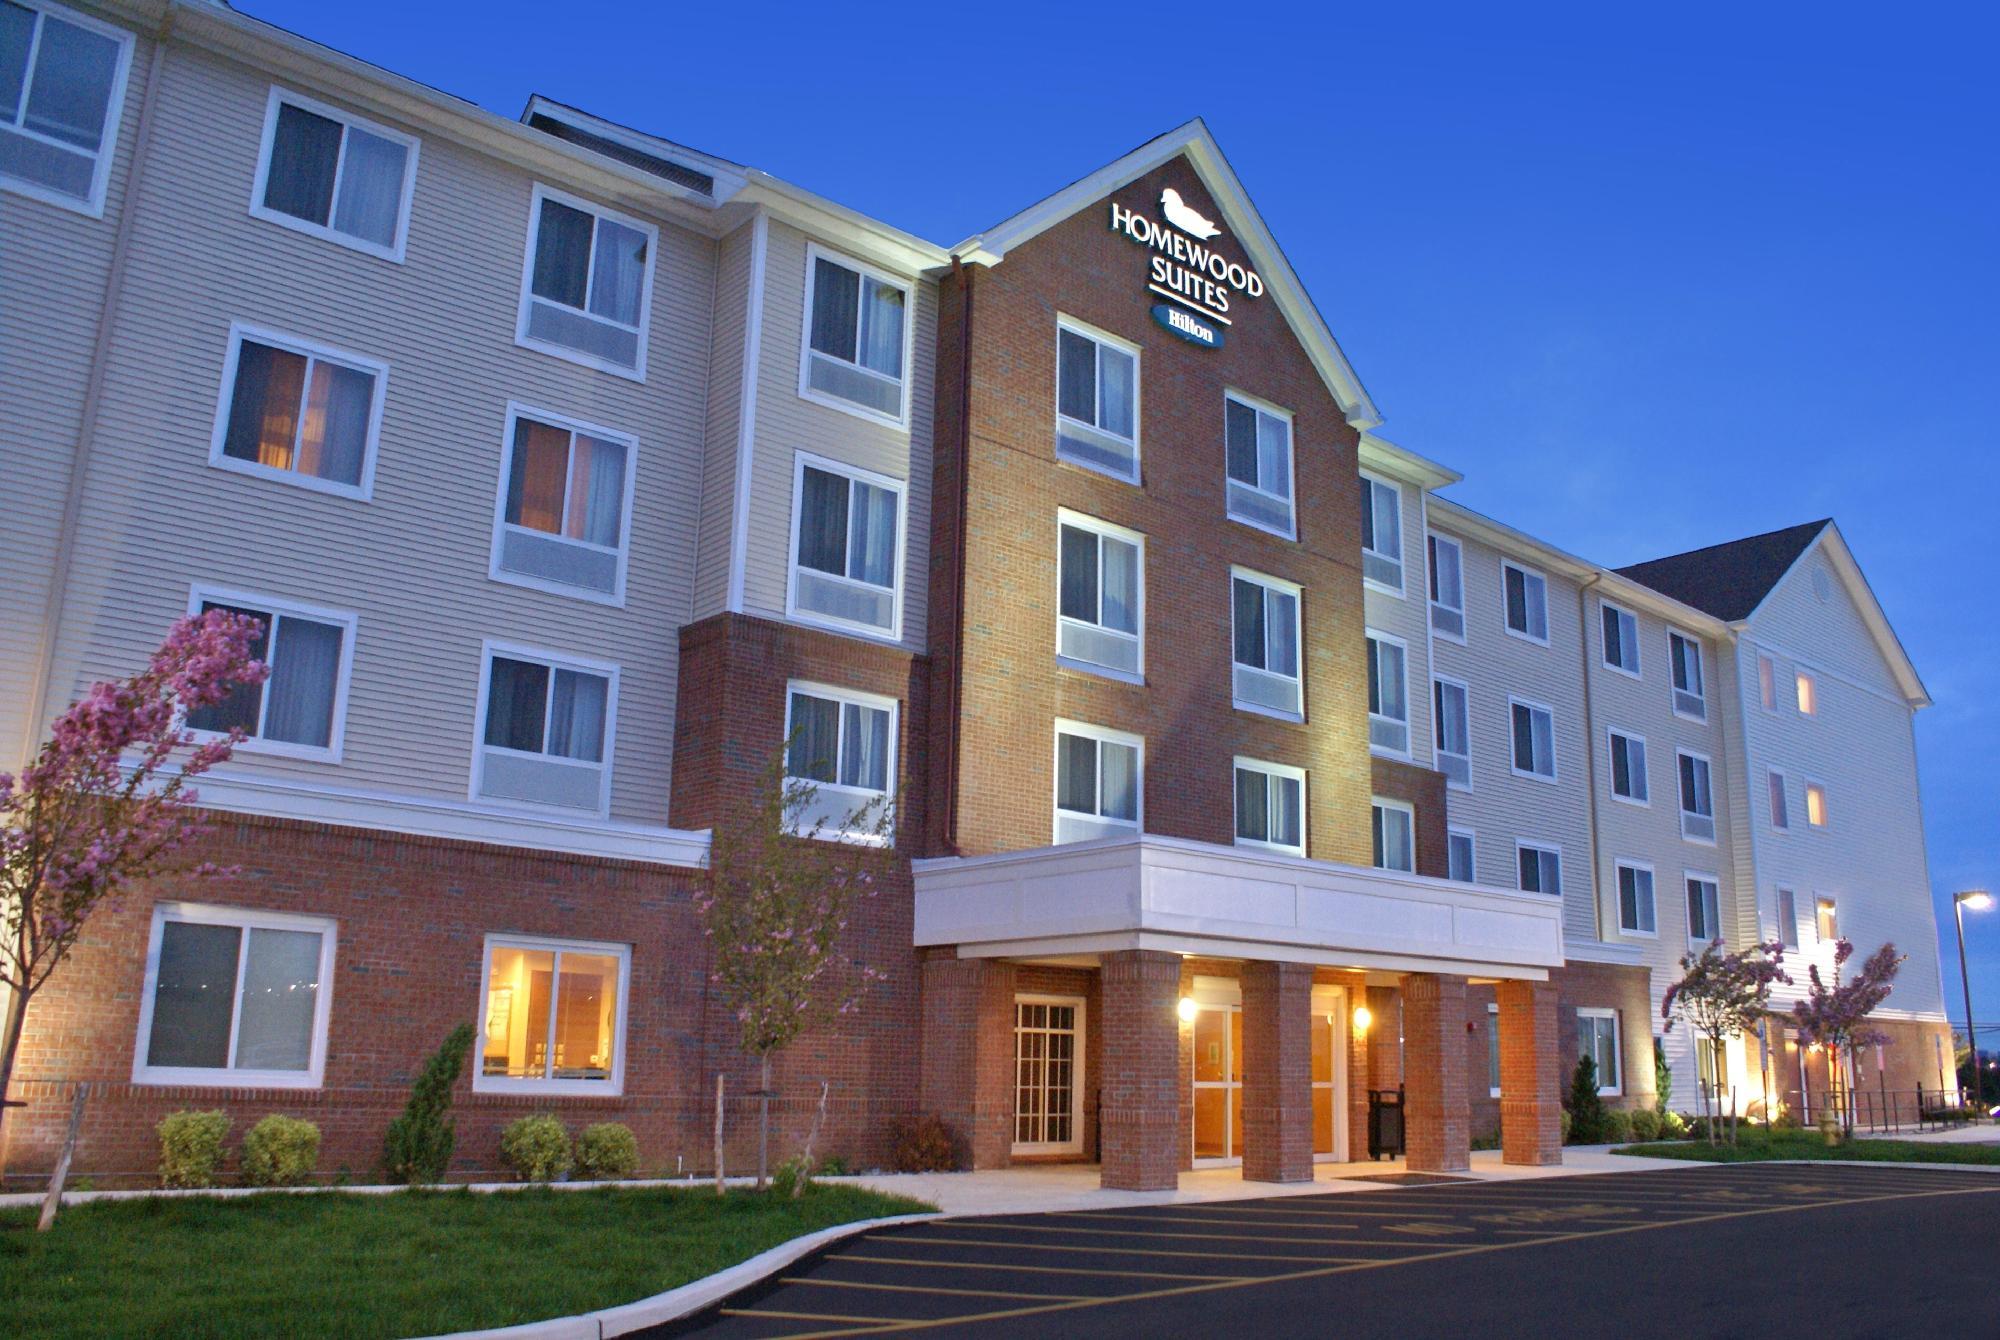 Photo of Homewood Suites by Hilton Allentown-West/Fogelsville, PA, Allentown, PA